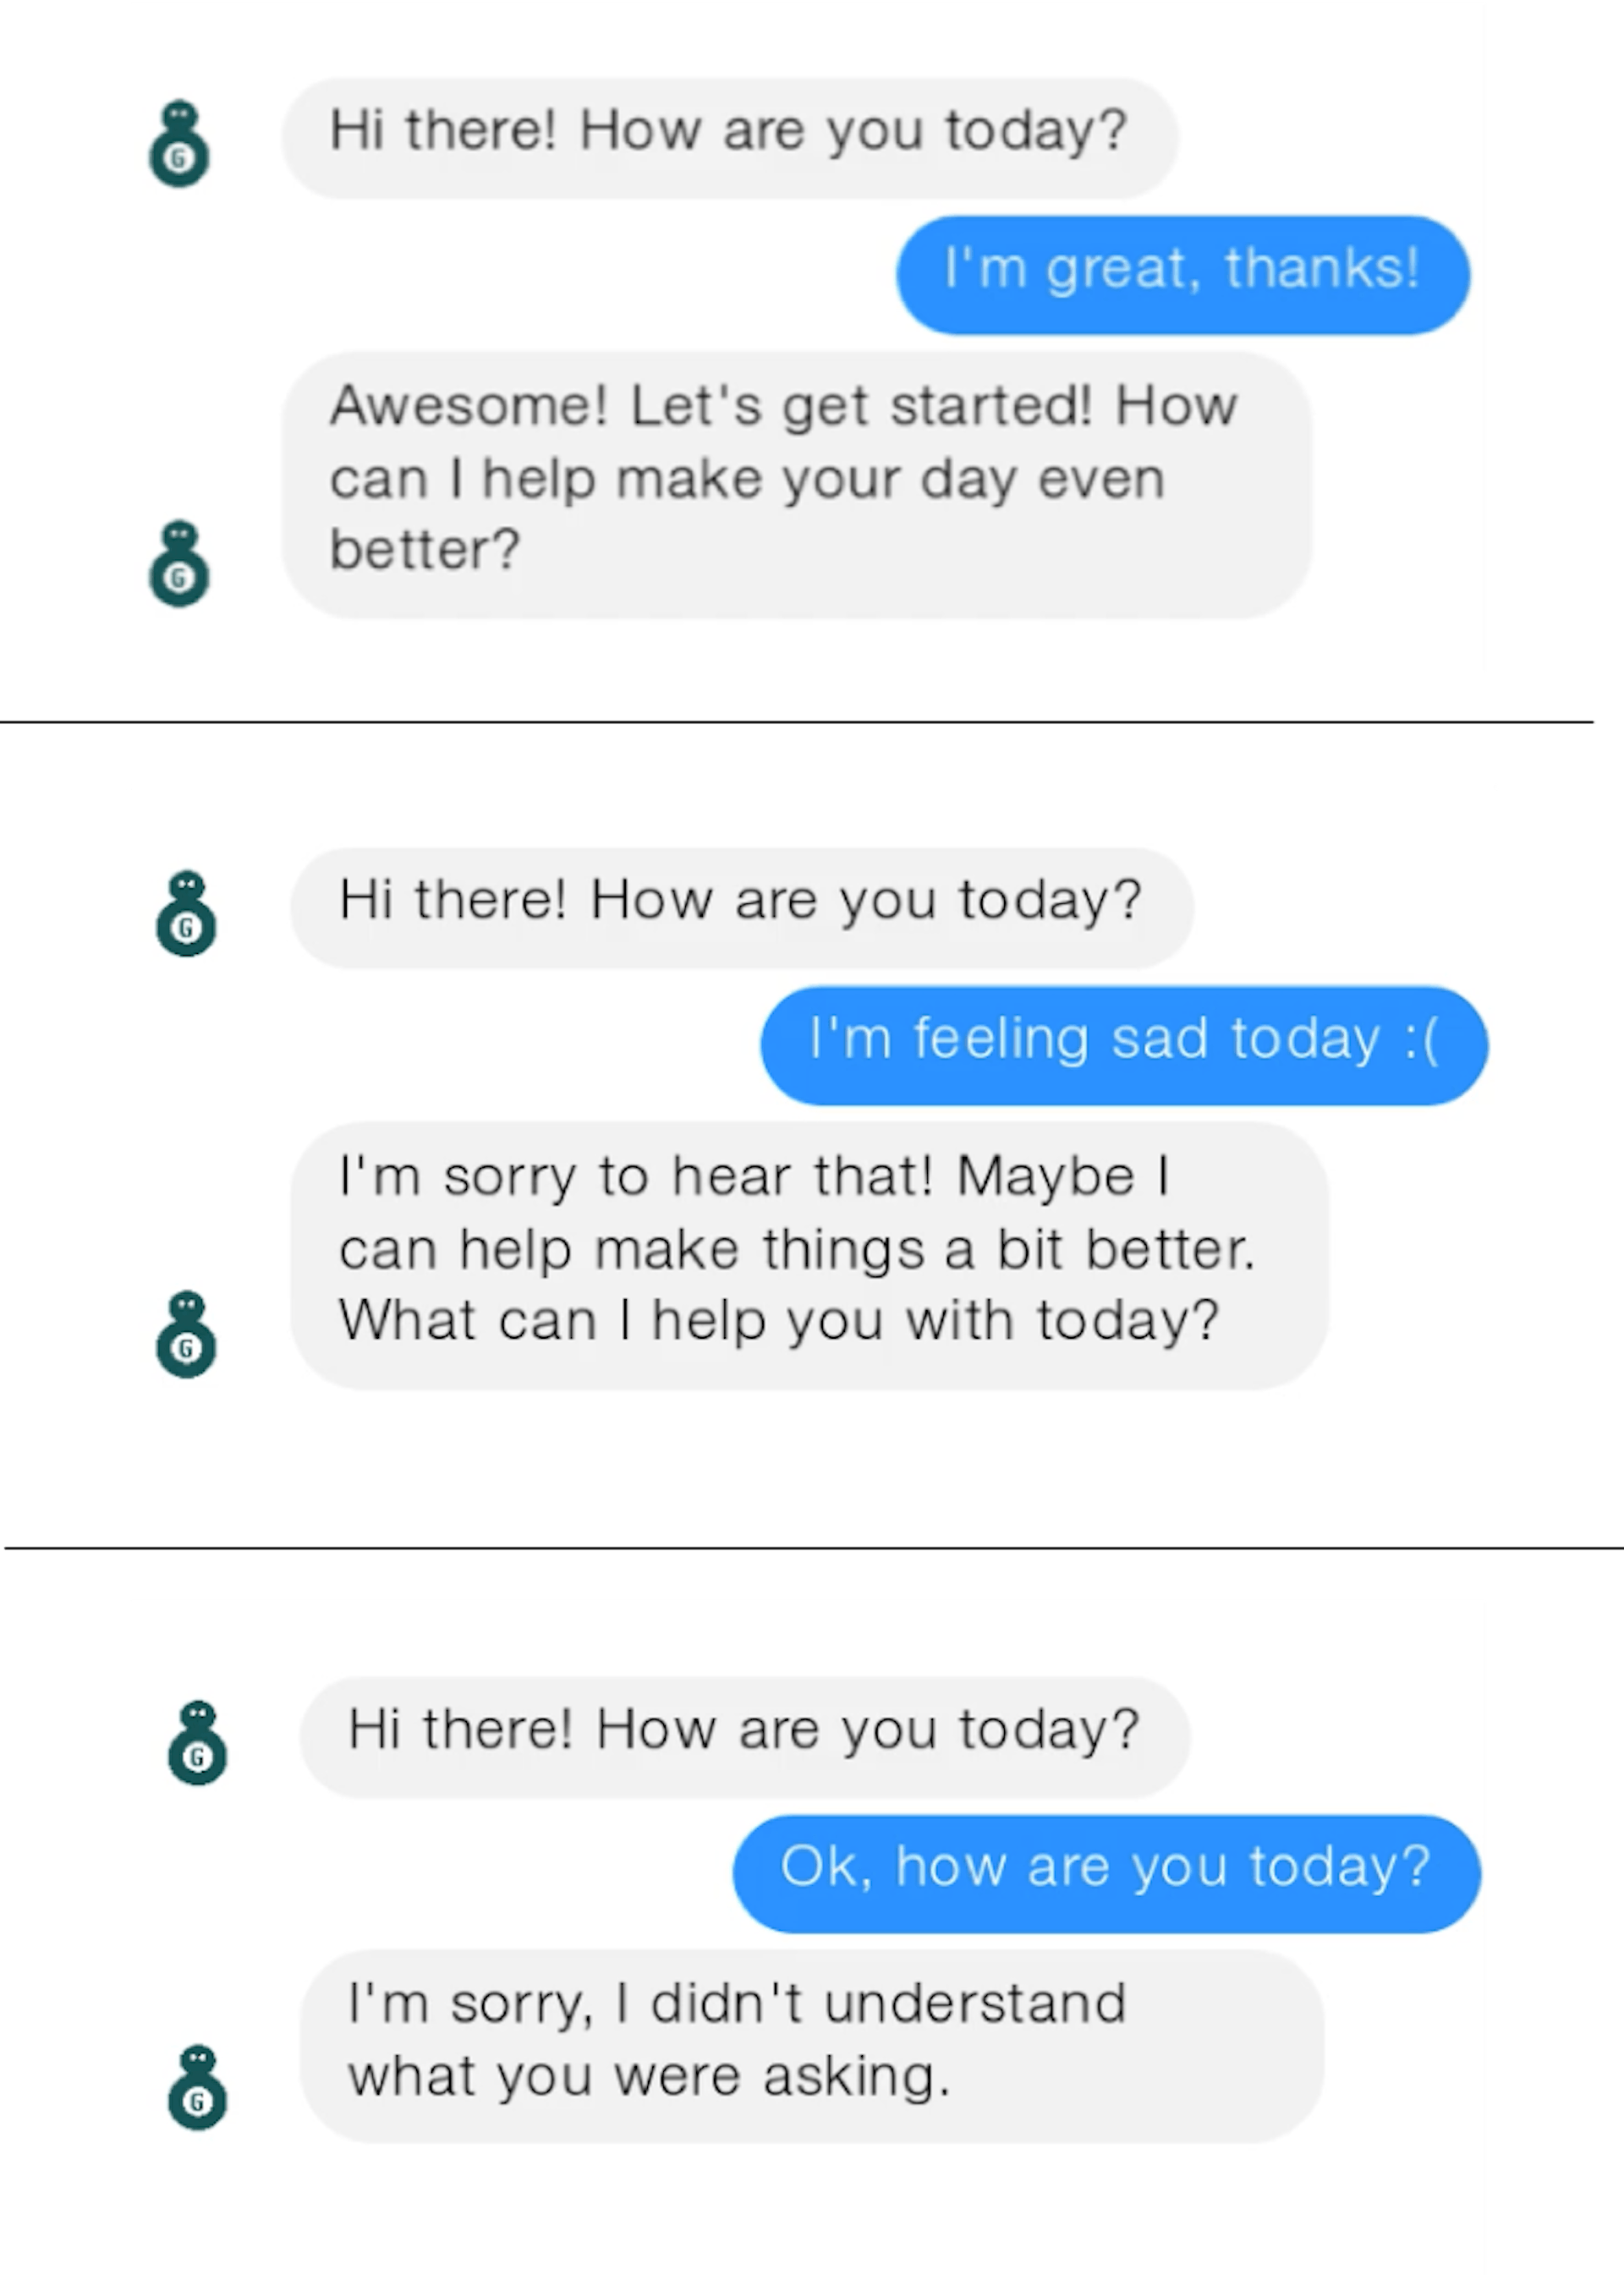 chatbot conversation conversational design build a bot